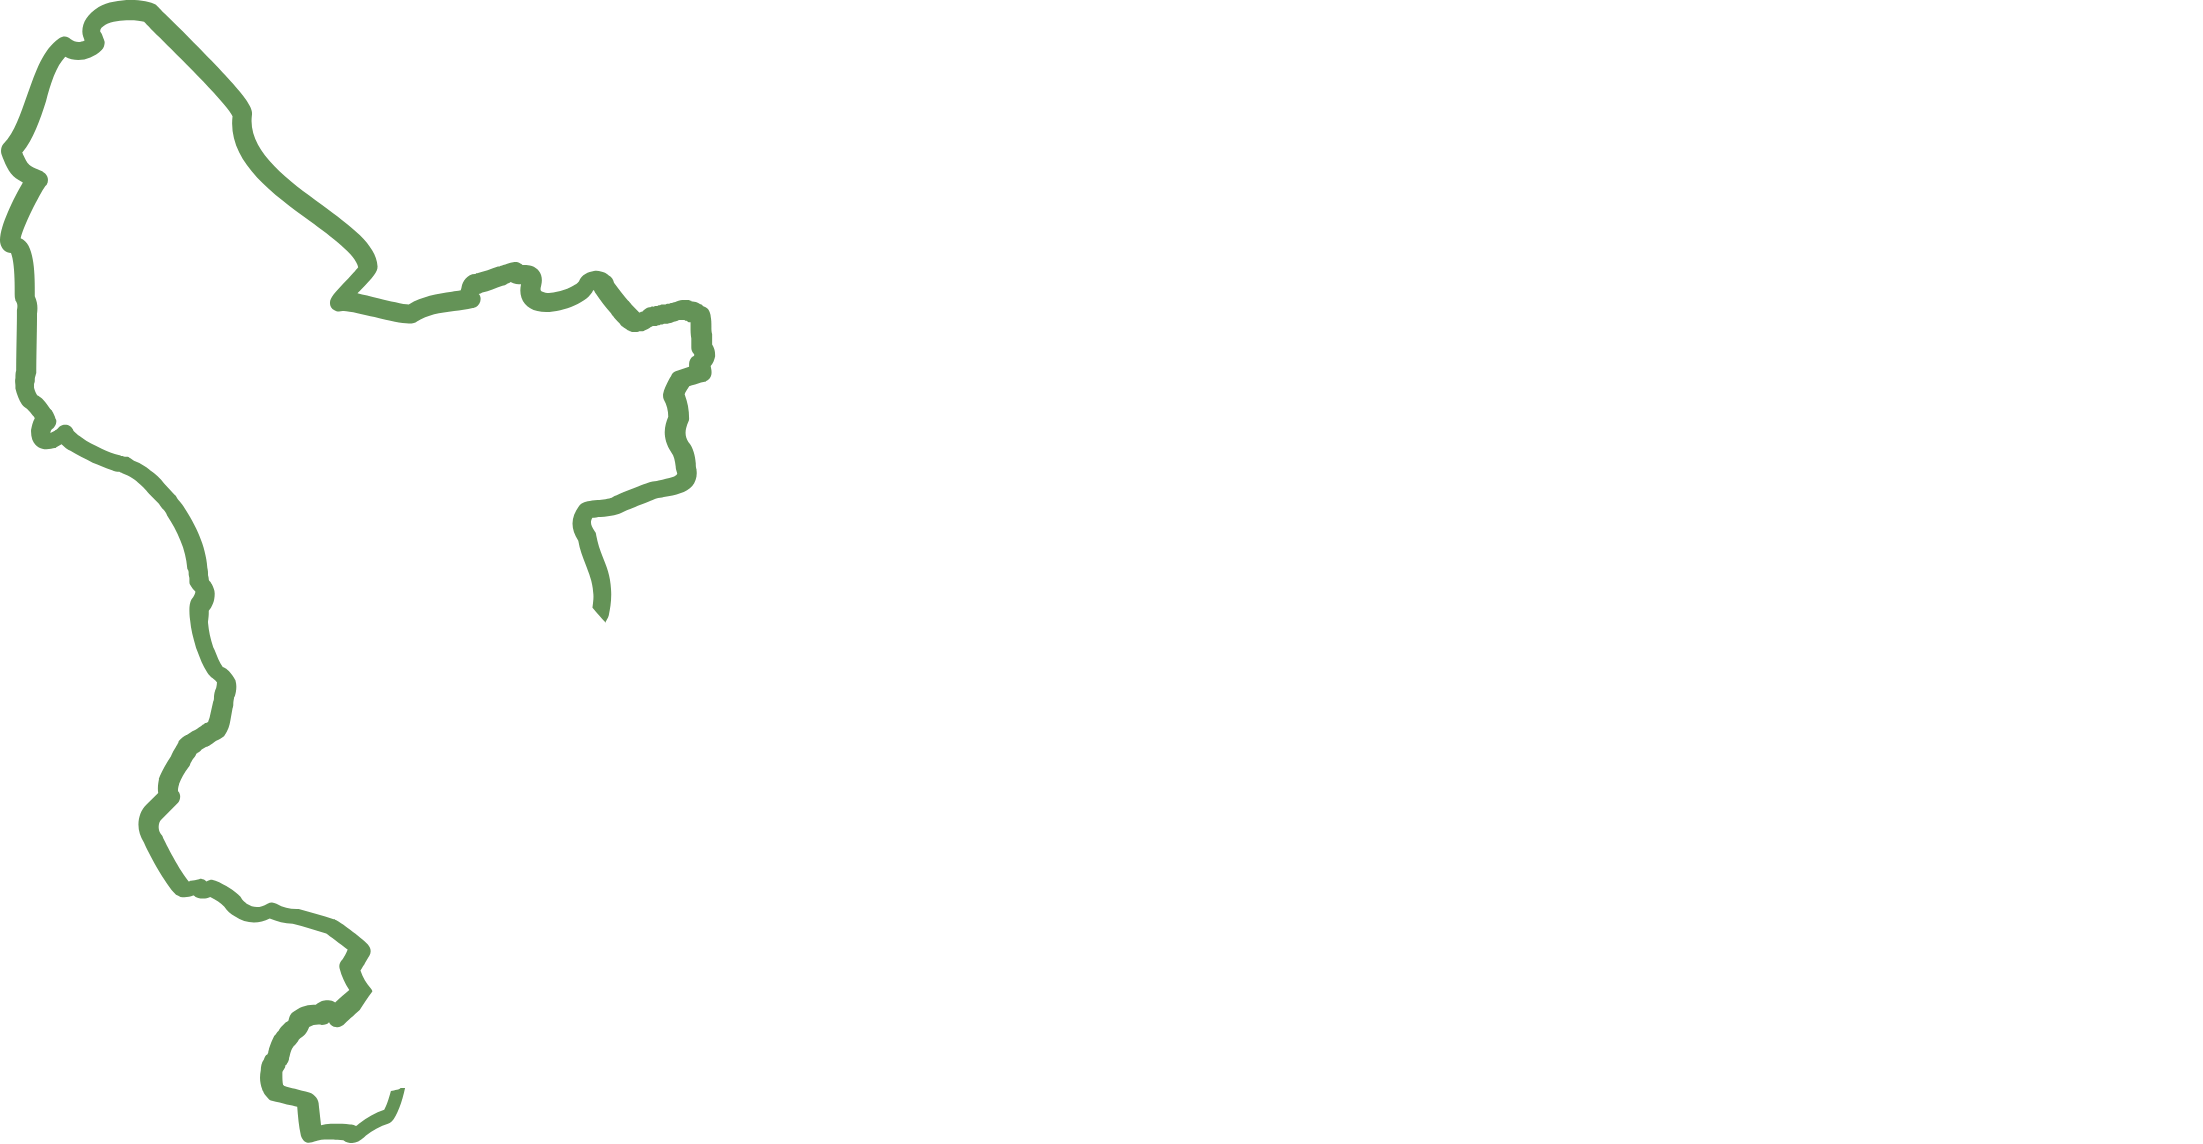 derbyshire bat group logo large